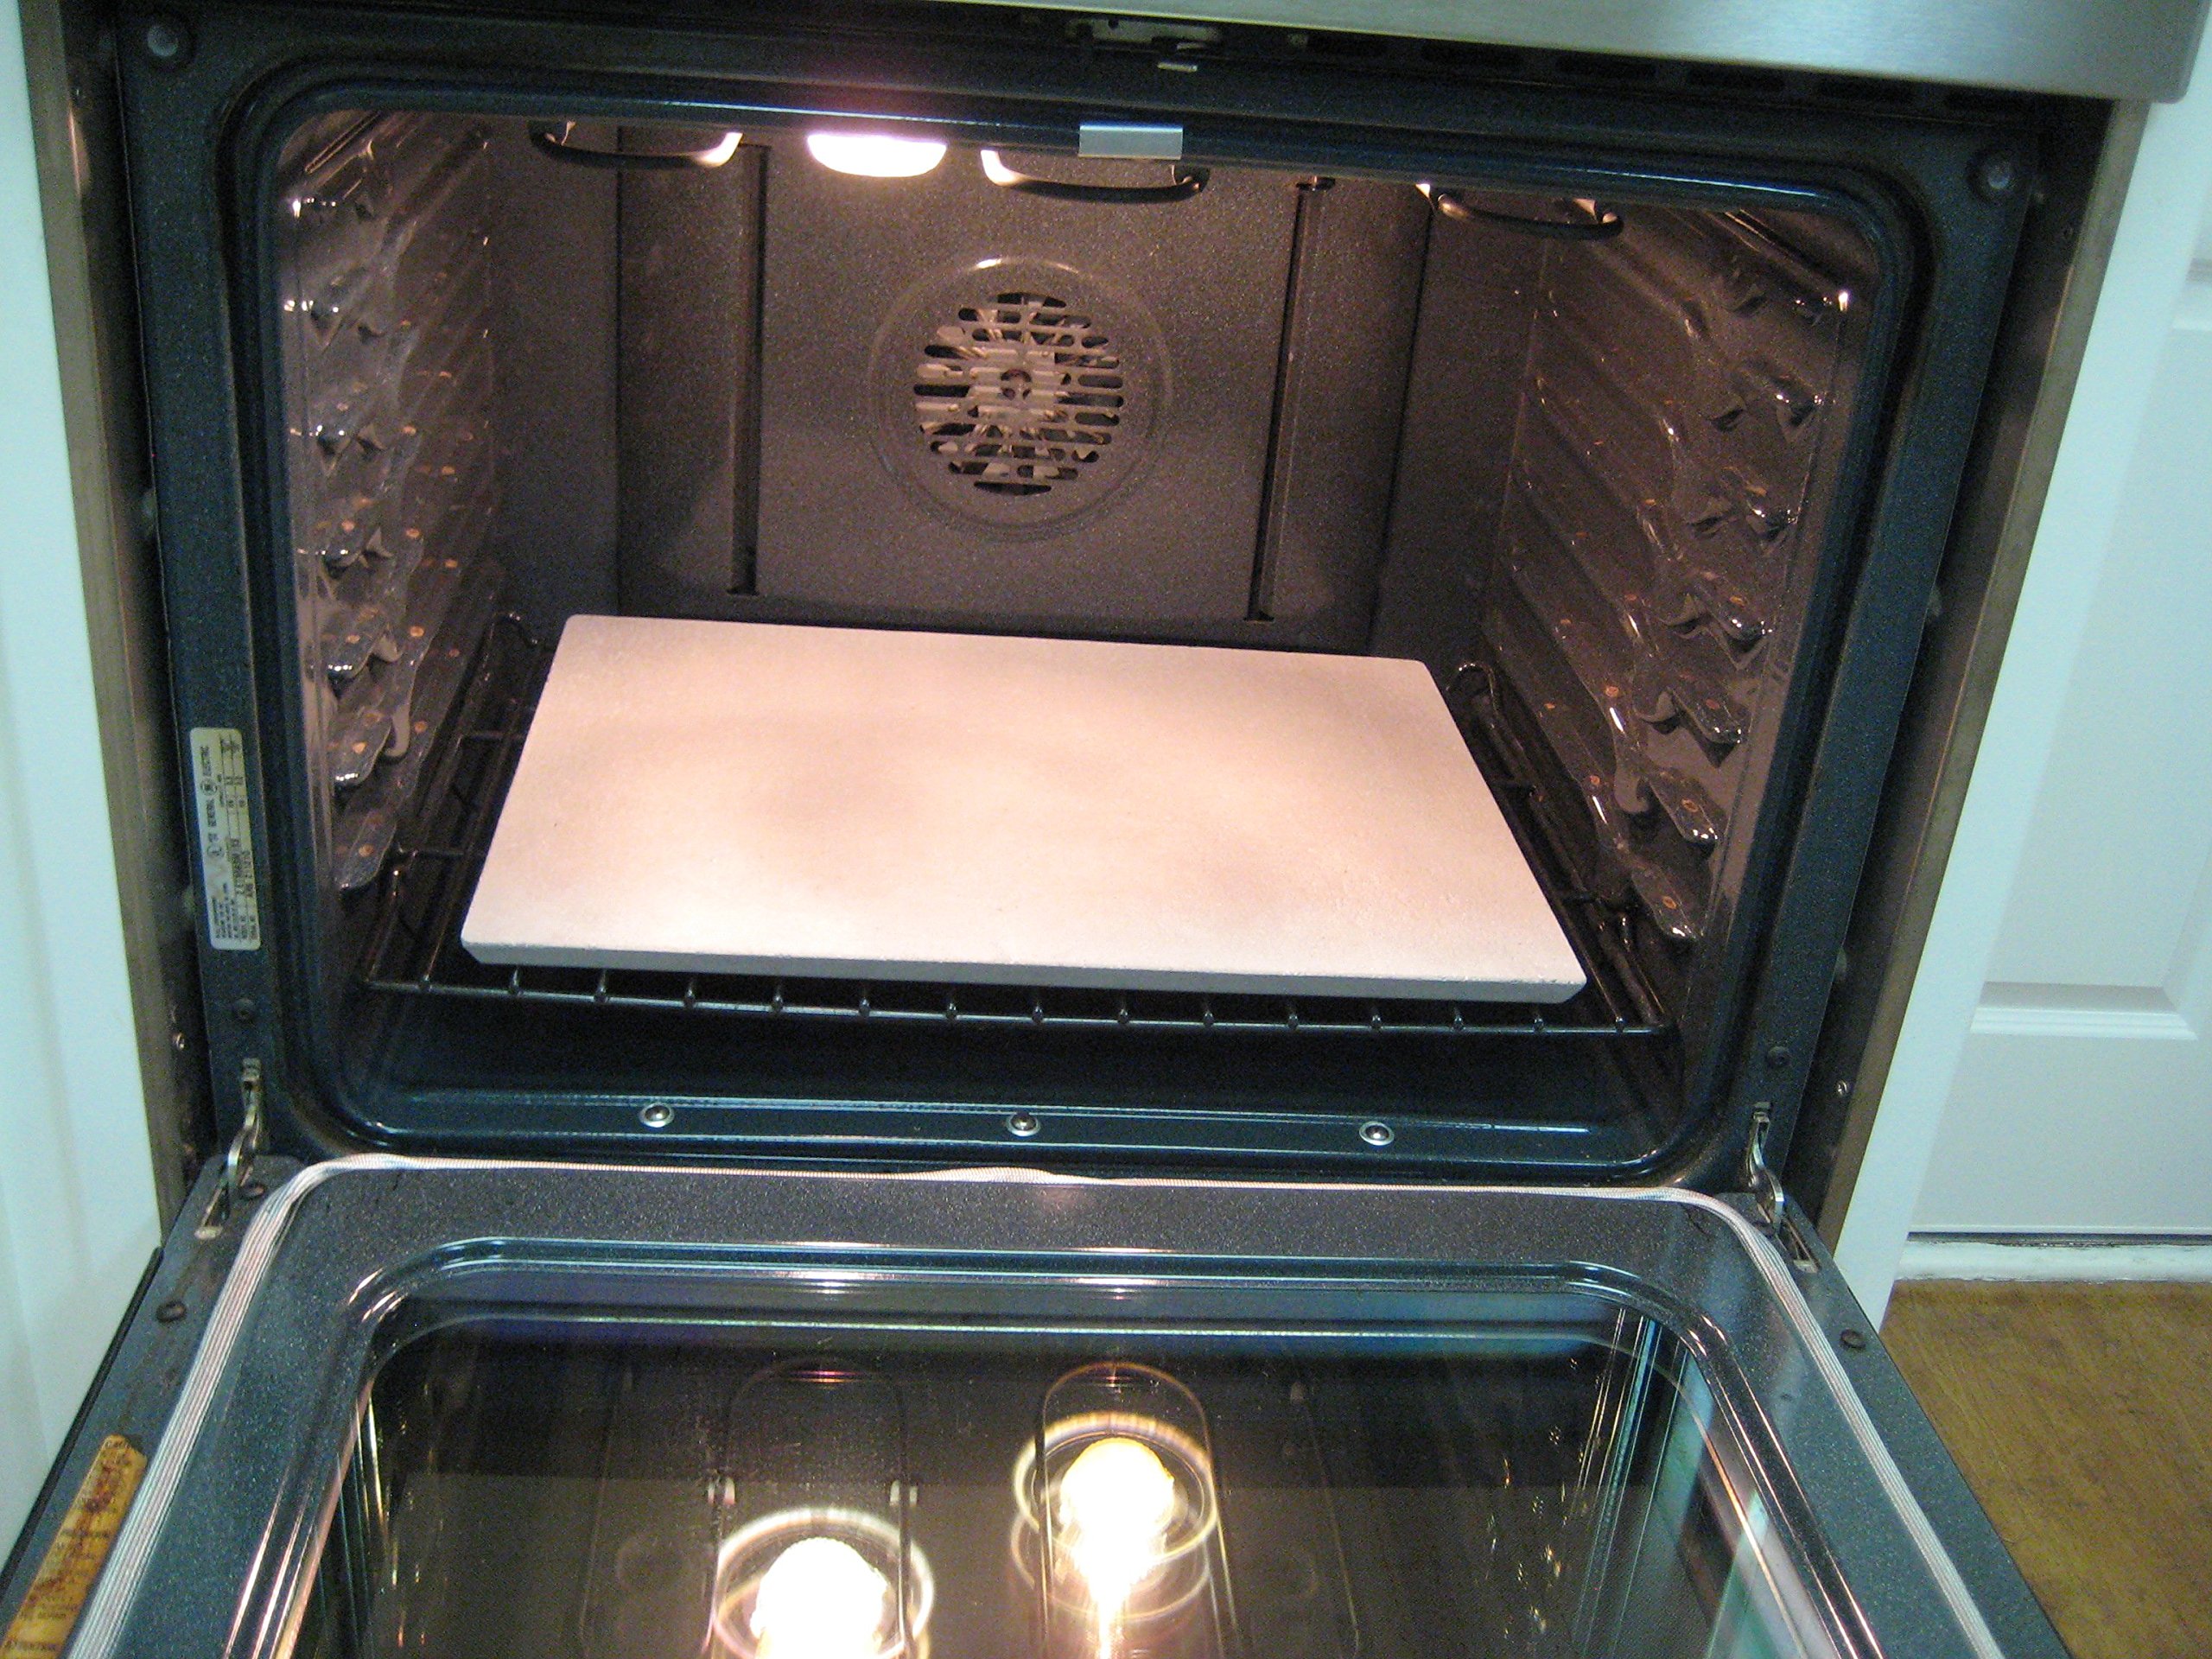 FibraMent-D Rectangular Home Oven Baking Stone Three Sizes (15 x 20